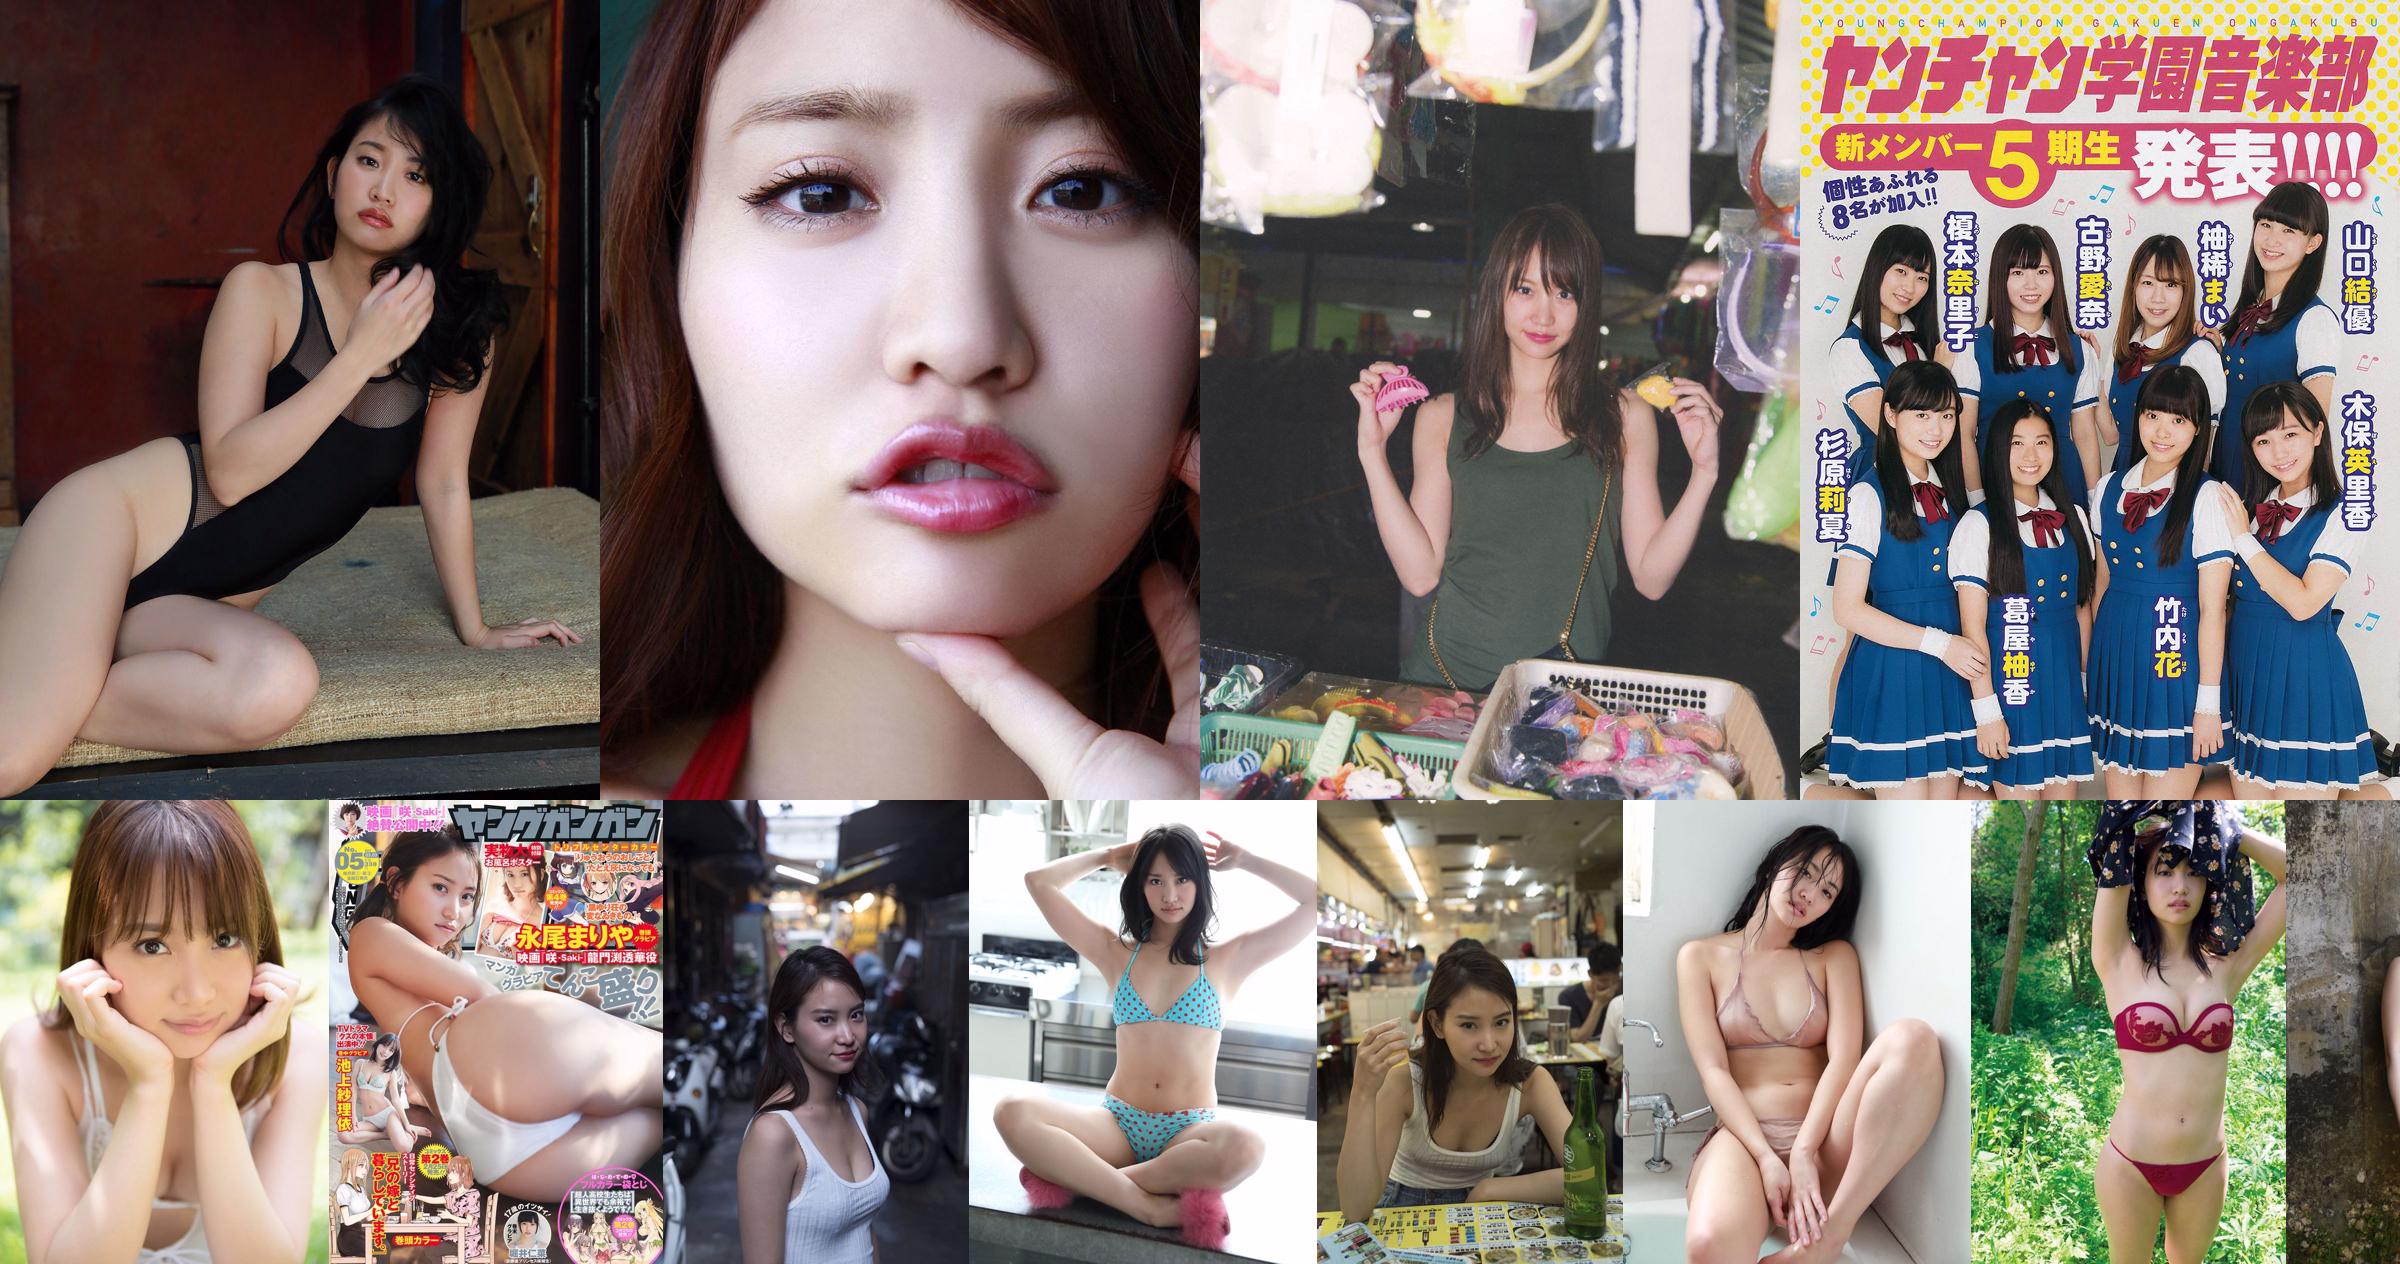 [Young Magazine] Mariya Nagao Mio Uema 2014 Photographie n ° 14 No.1b544b Page 4